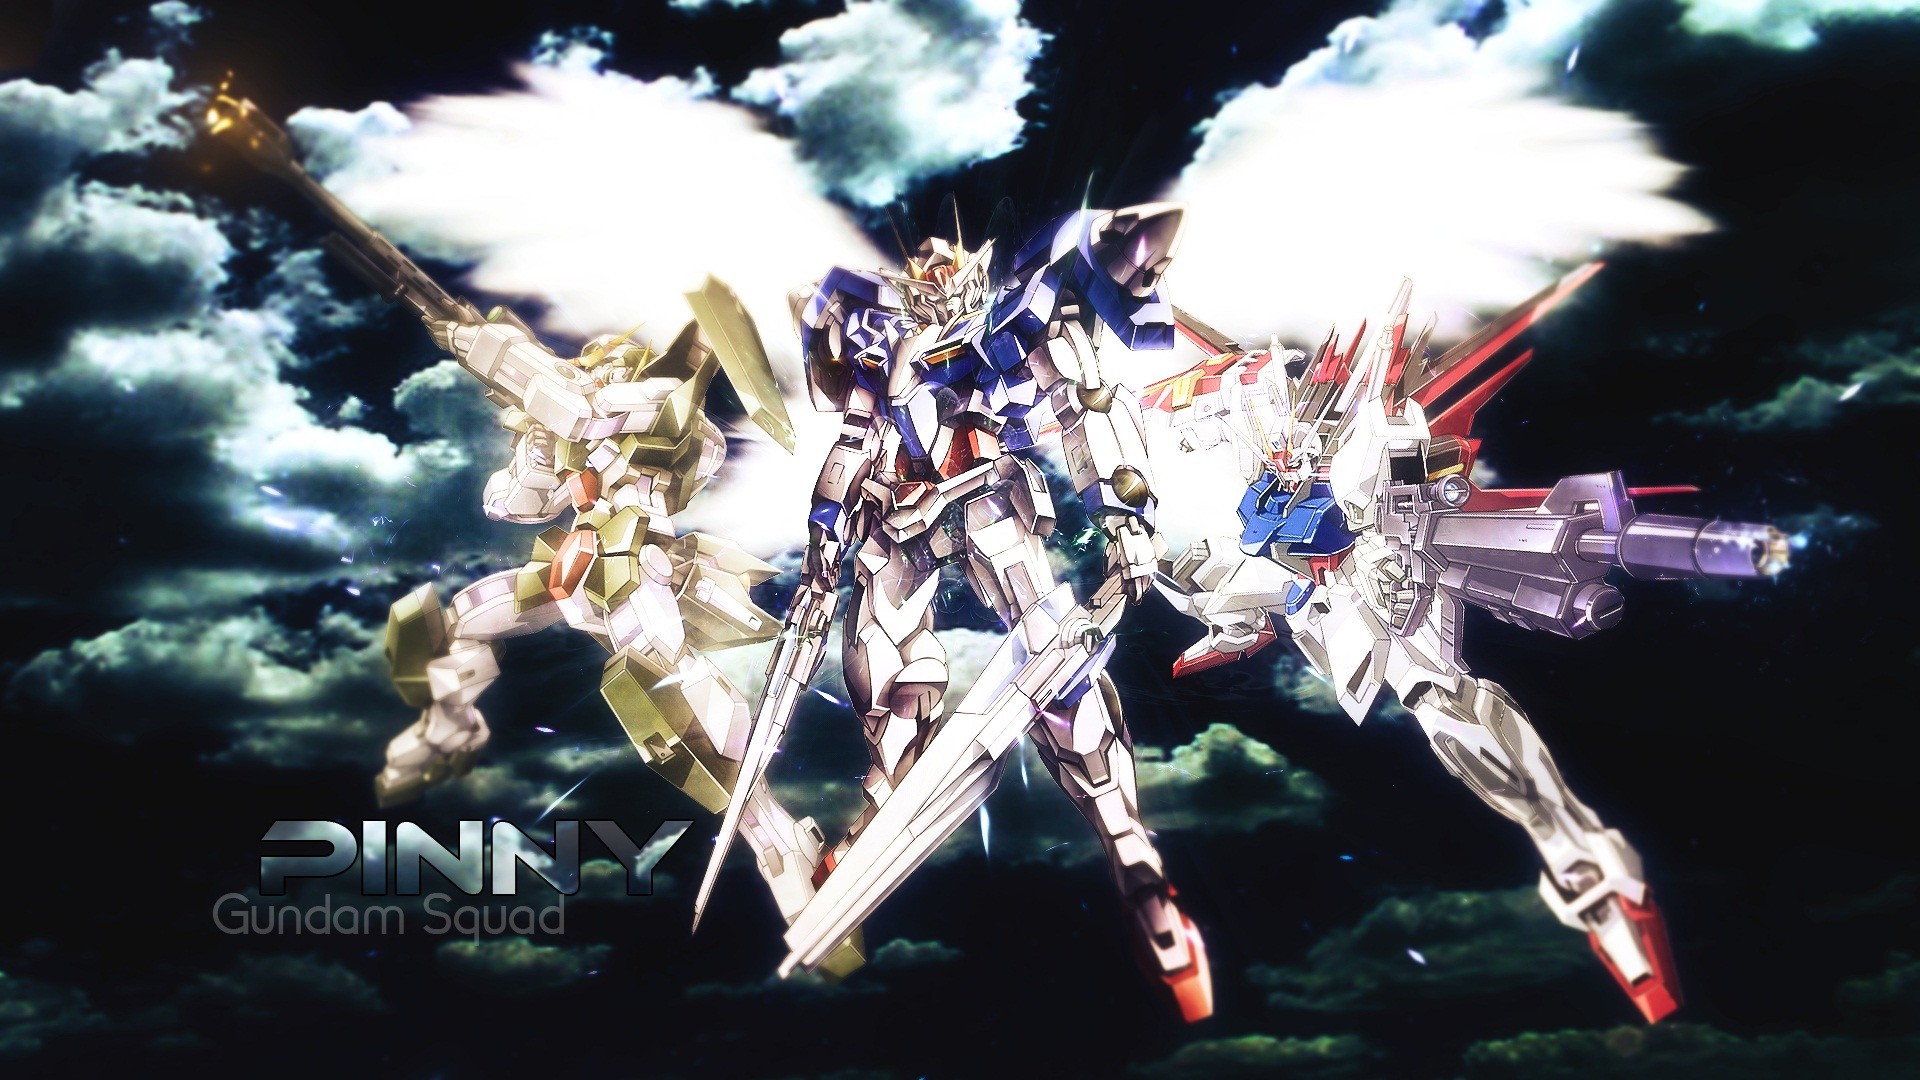 Anime, Mobile Suit Gundam Wing, Wallpaper, Hd Wallpaper, - Gundam Wing Wallpaper 4k - HD Wallpaper 